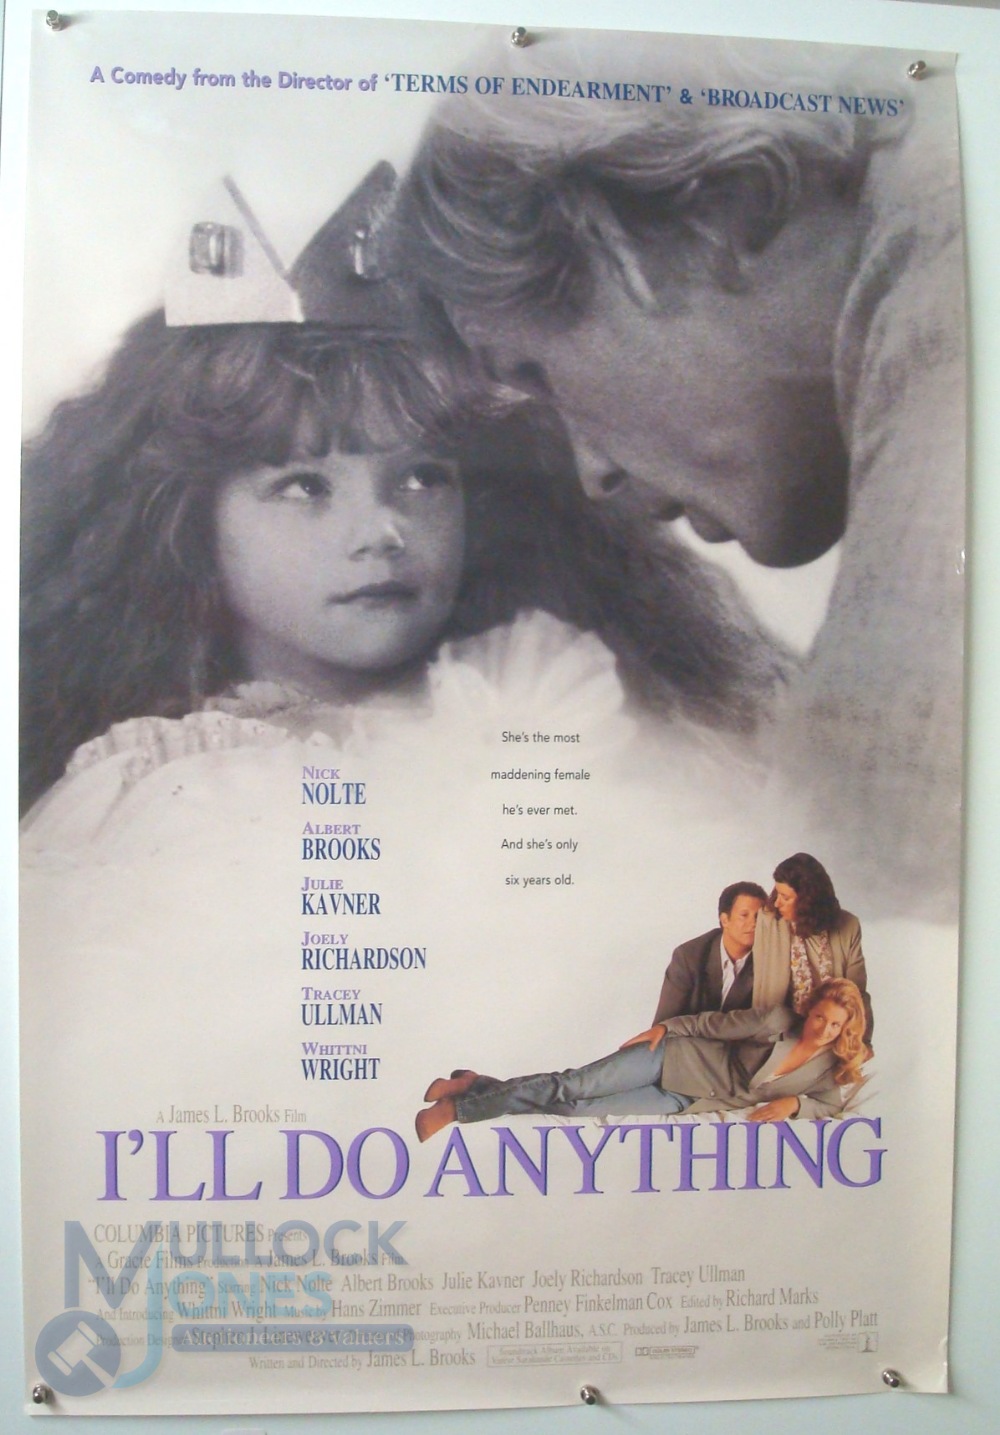 4 Original Movie/Film Posters - I’ll Do Anything, Amistad, The Cowboy Way, Eve’s Bayou - 40x30"